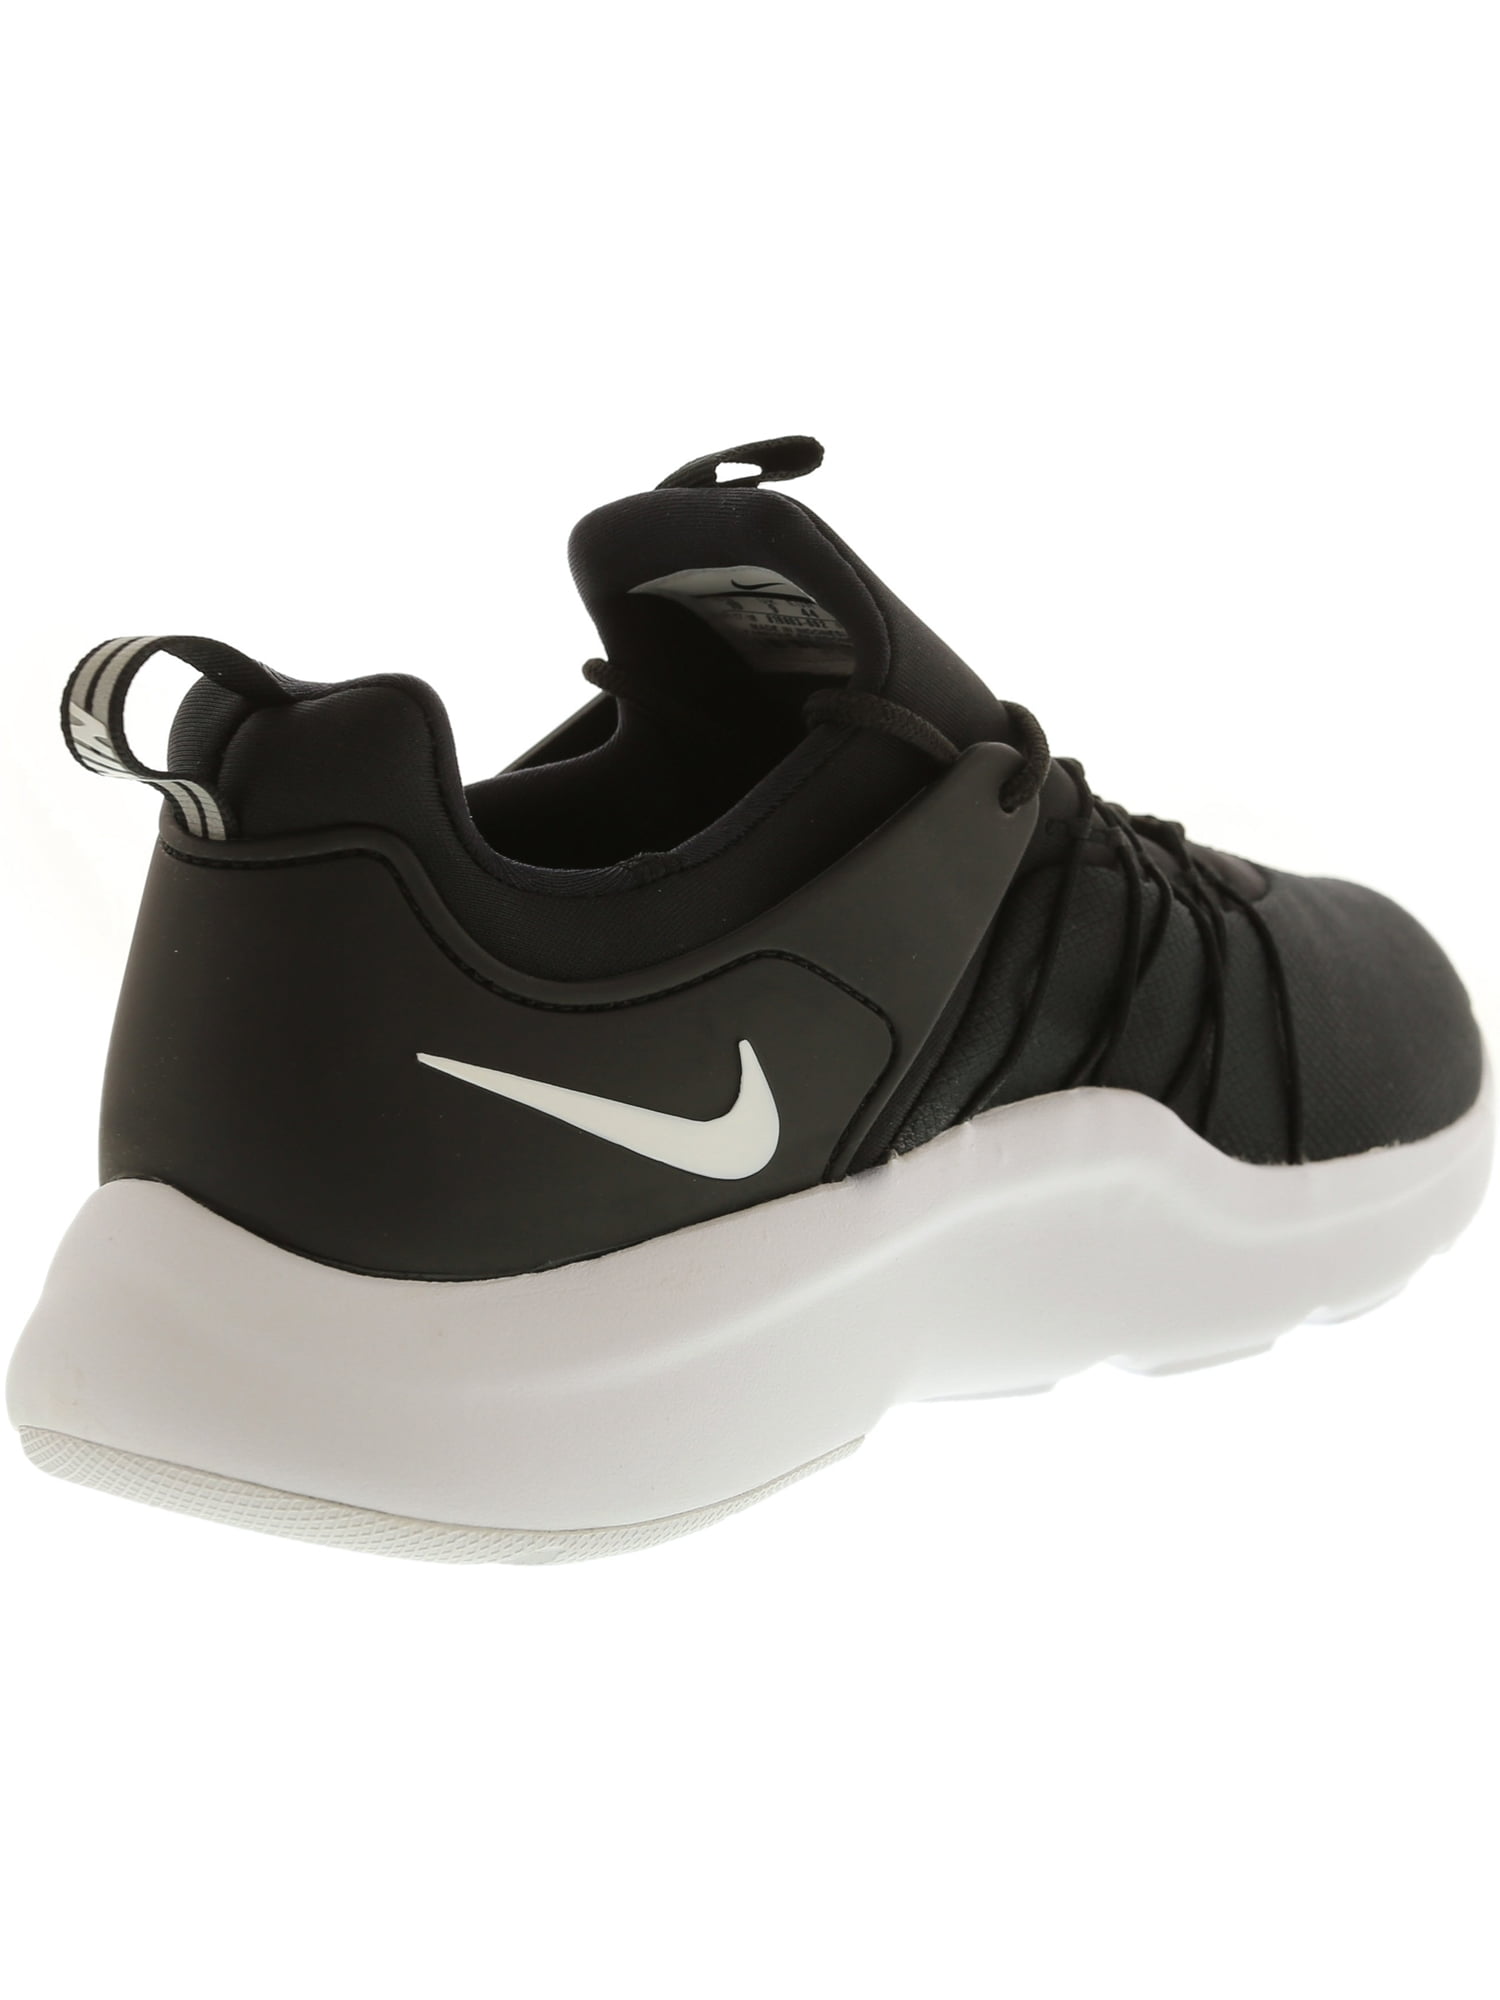 Nike Men's Darwin Black - Ankle-High Running Shoe 11M - Walmart.com